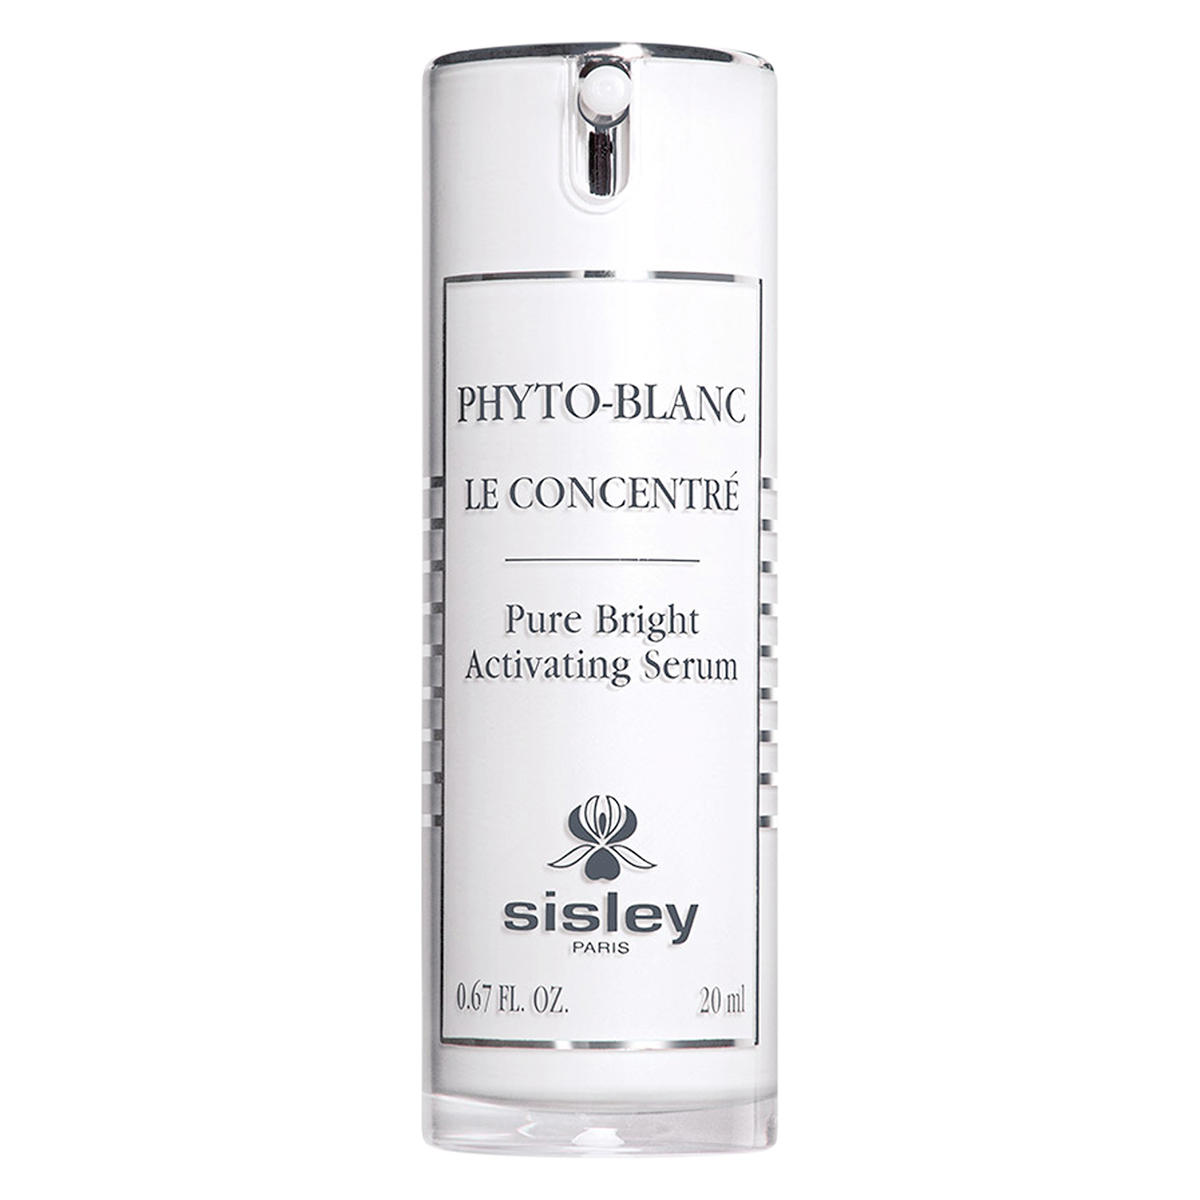 Sisley Paris Phyto-Blanc Phyto-Blanc Le Concentré Pure Bright Activating Serum 20 ml - 2